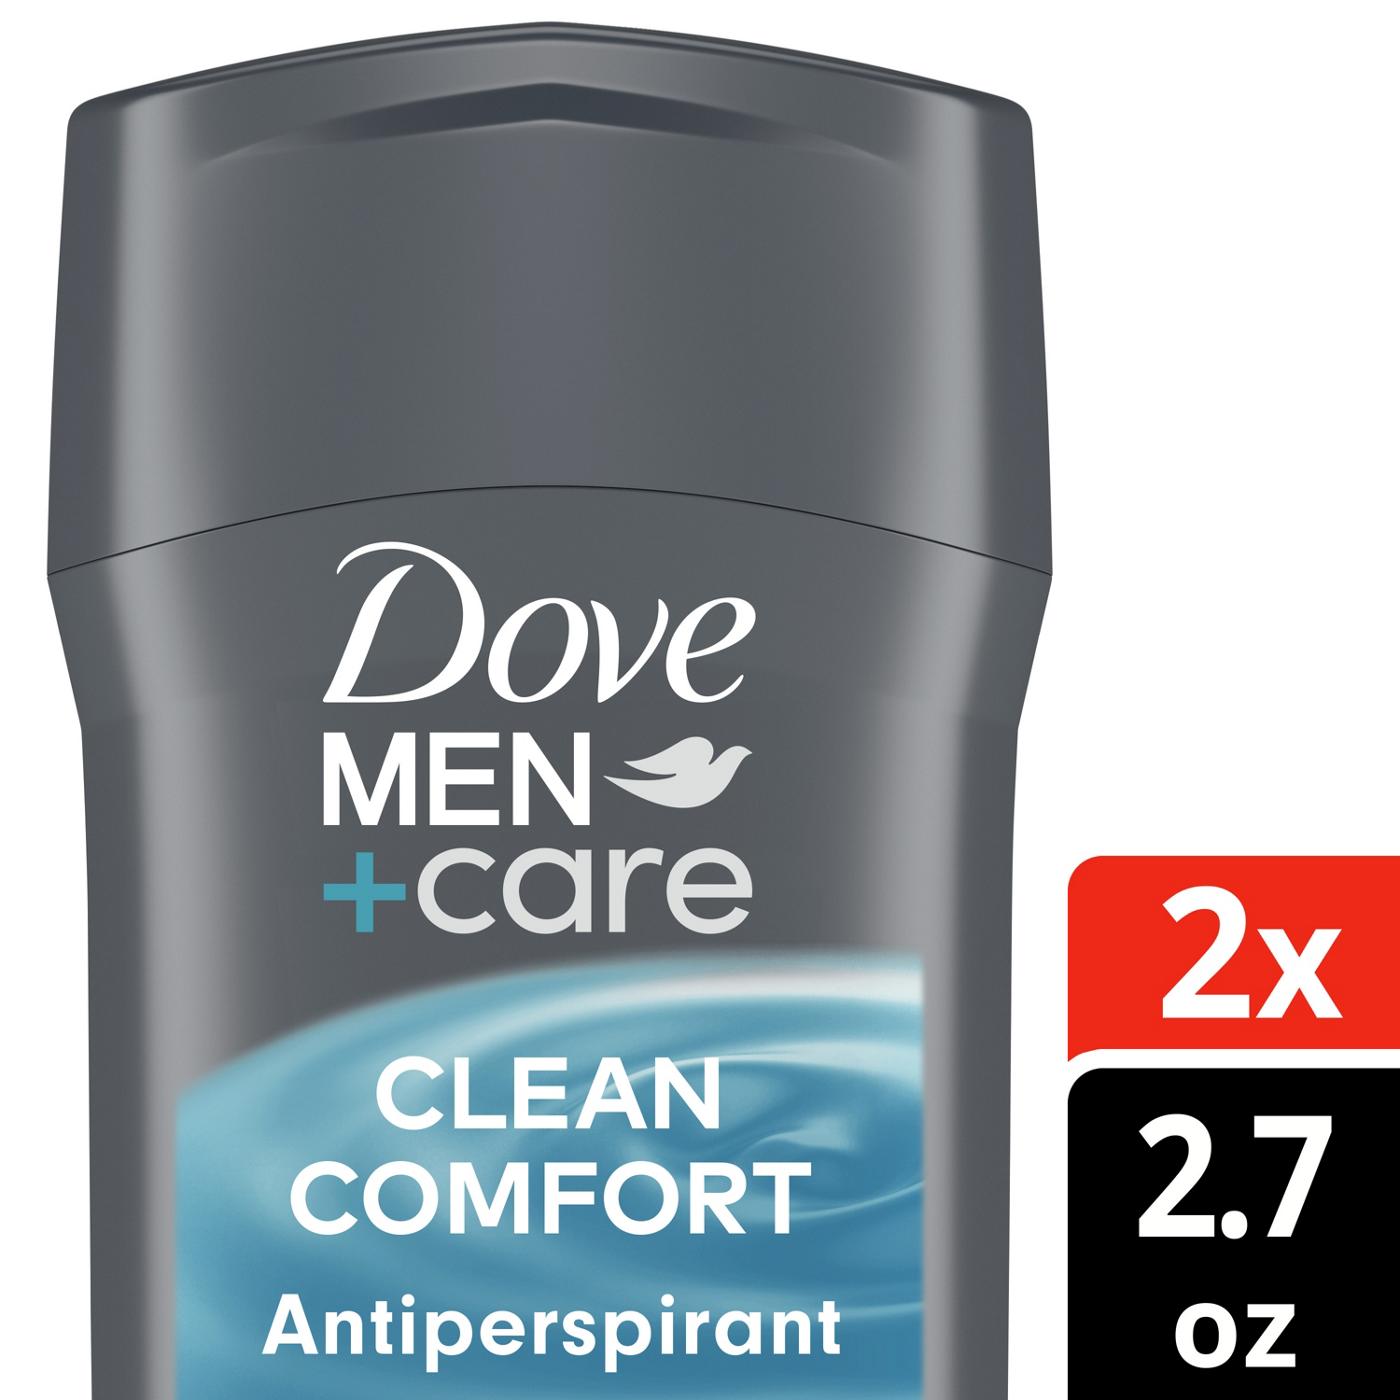 Dove Men+Care Antiperspirant Deodorant Stick Twin Pack - Clean Comfort; image 4 of 4